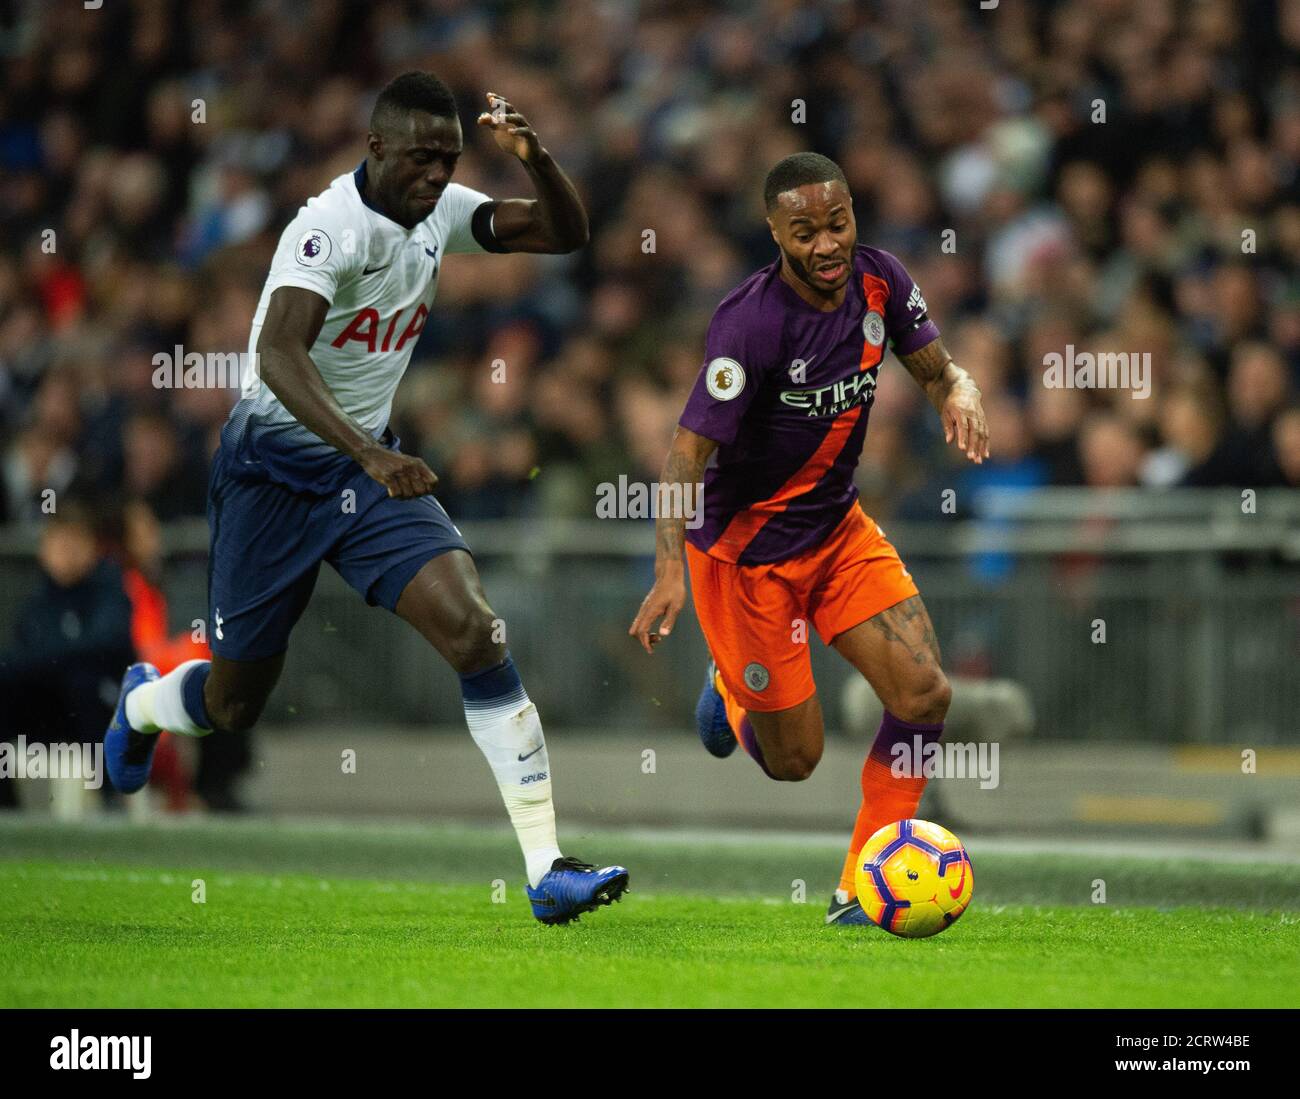 Raheem Sterling. Spurs v Manchester City. Premier League. 22/10/2018  PHOTO CREDIT : © MARK PAIN / ALAMY STOCK PHOTO Stock Photo